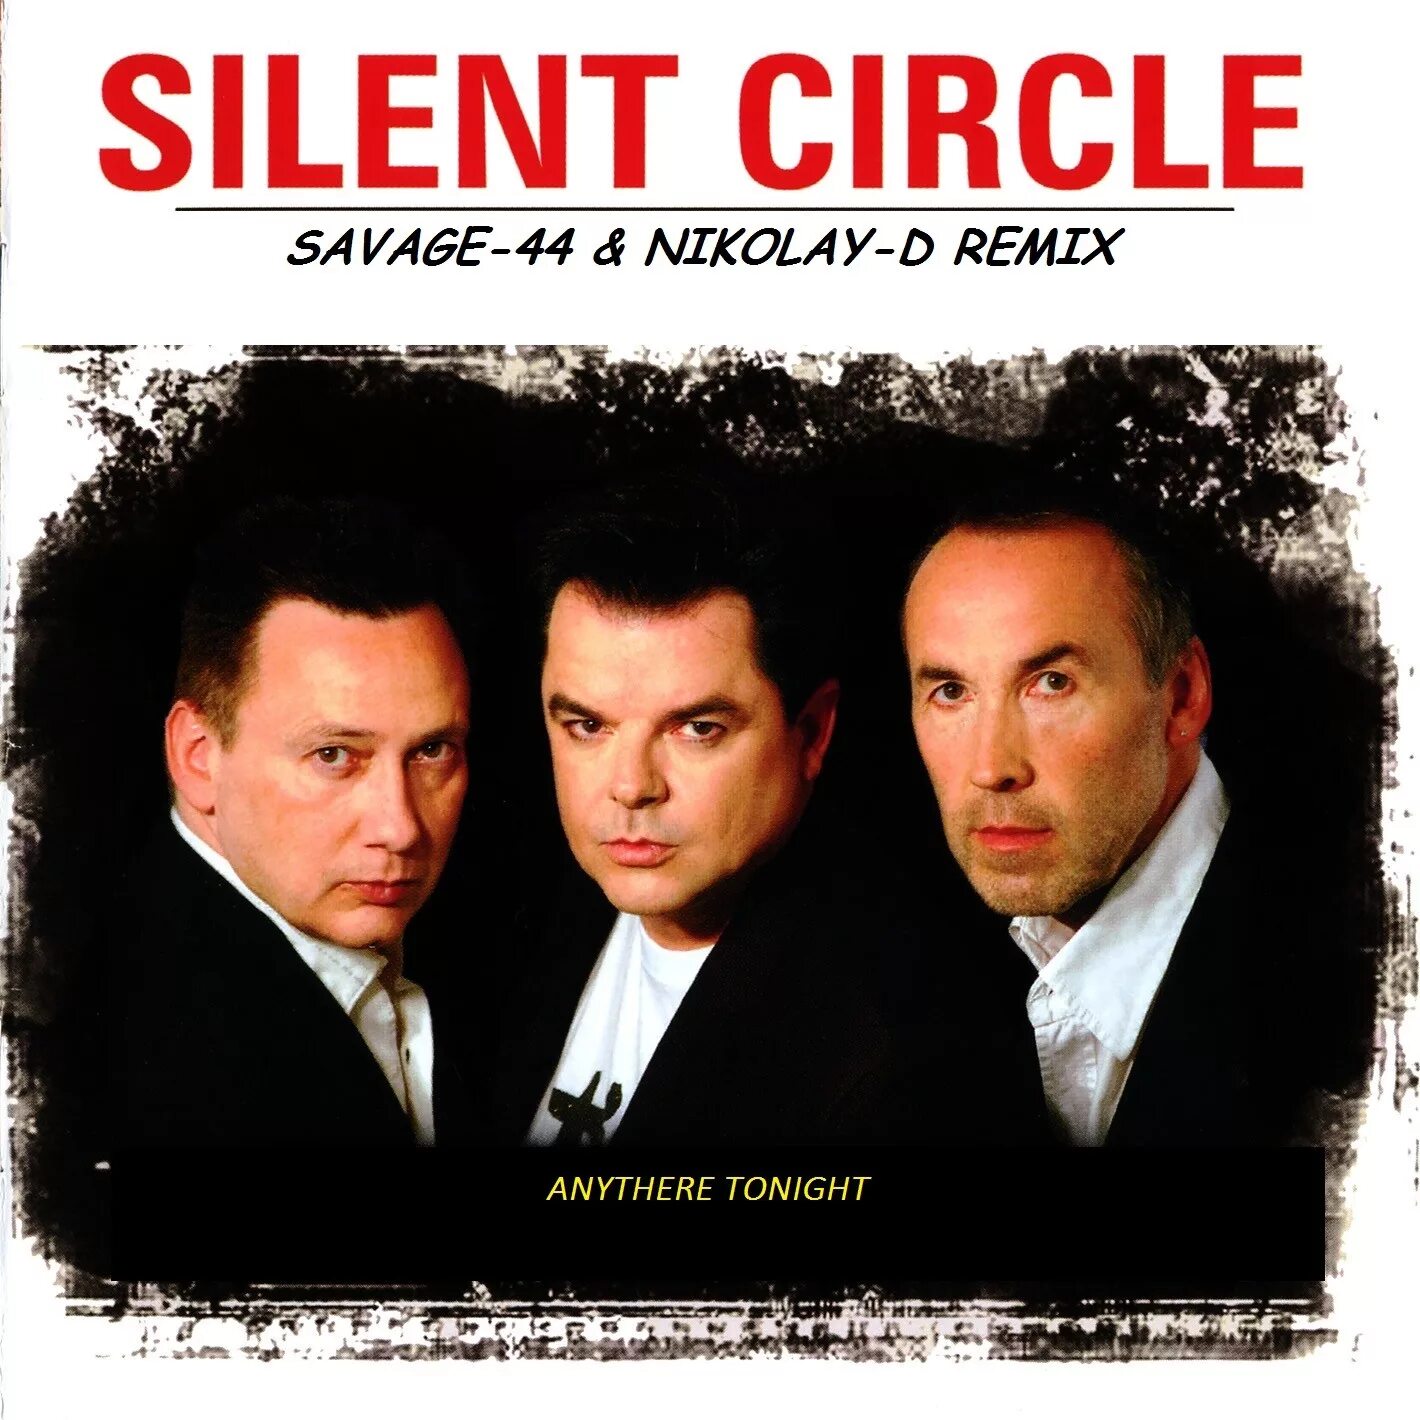 Слушать 320 кбит. Circle of Silence группа. Silent circle обложки альбомов. Харальд Шефер Silent circle. Юрген Беренс Silent circle.